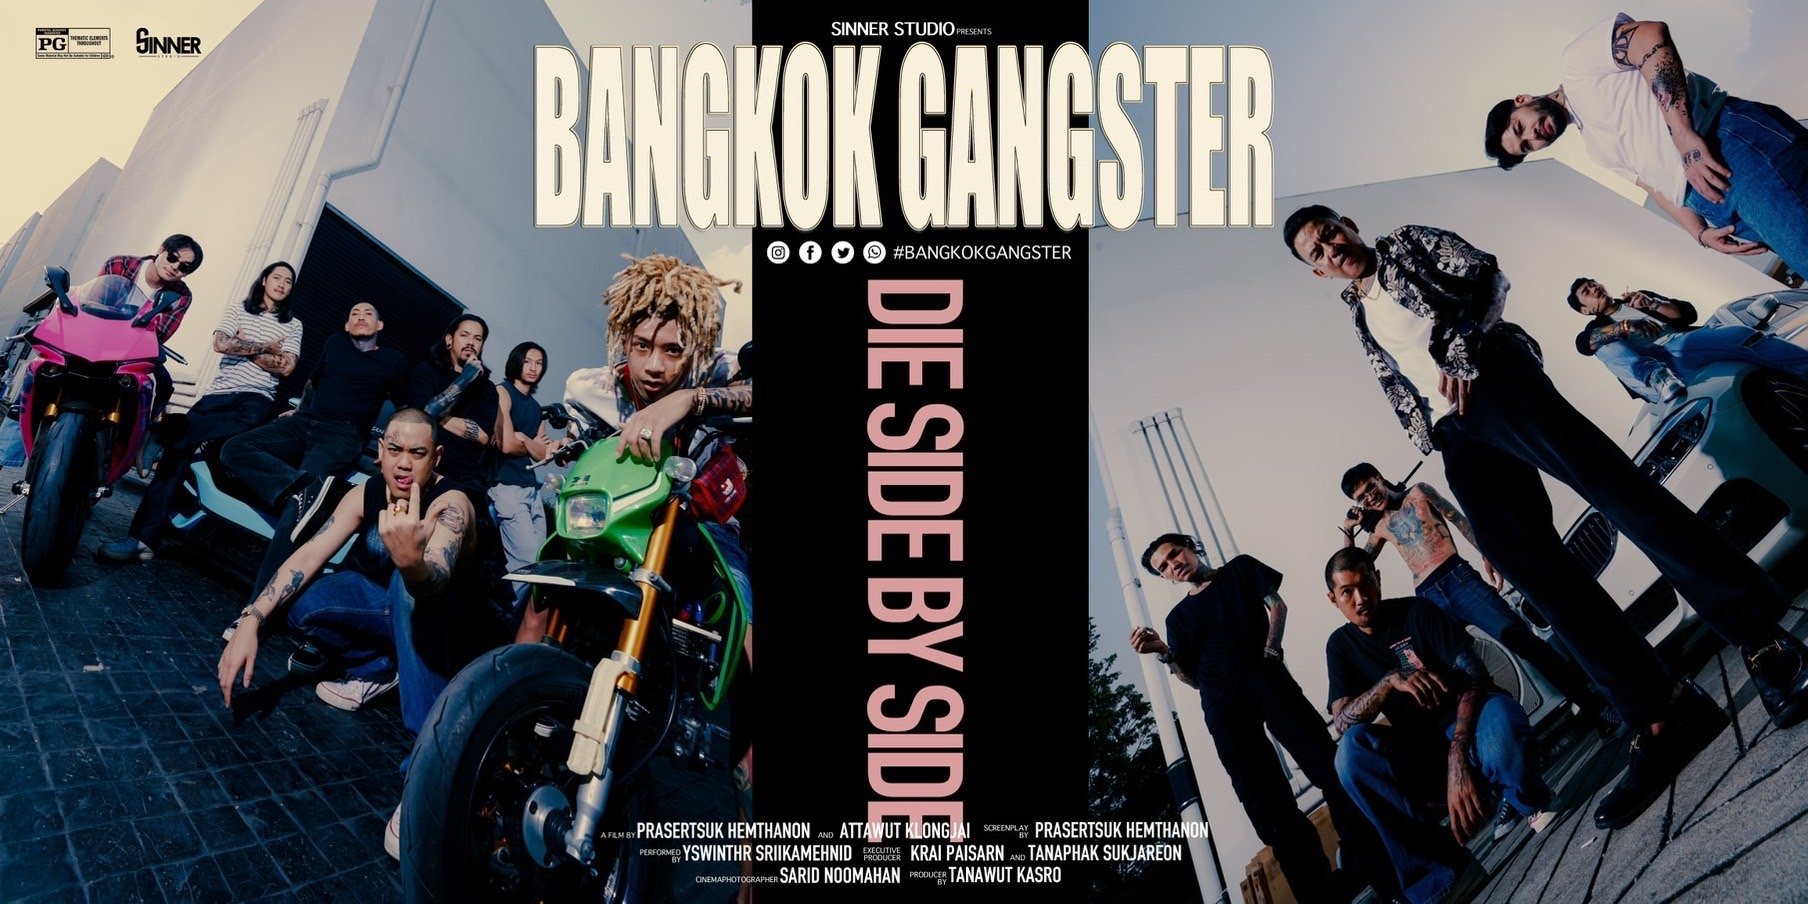  Bangkok Gangster